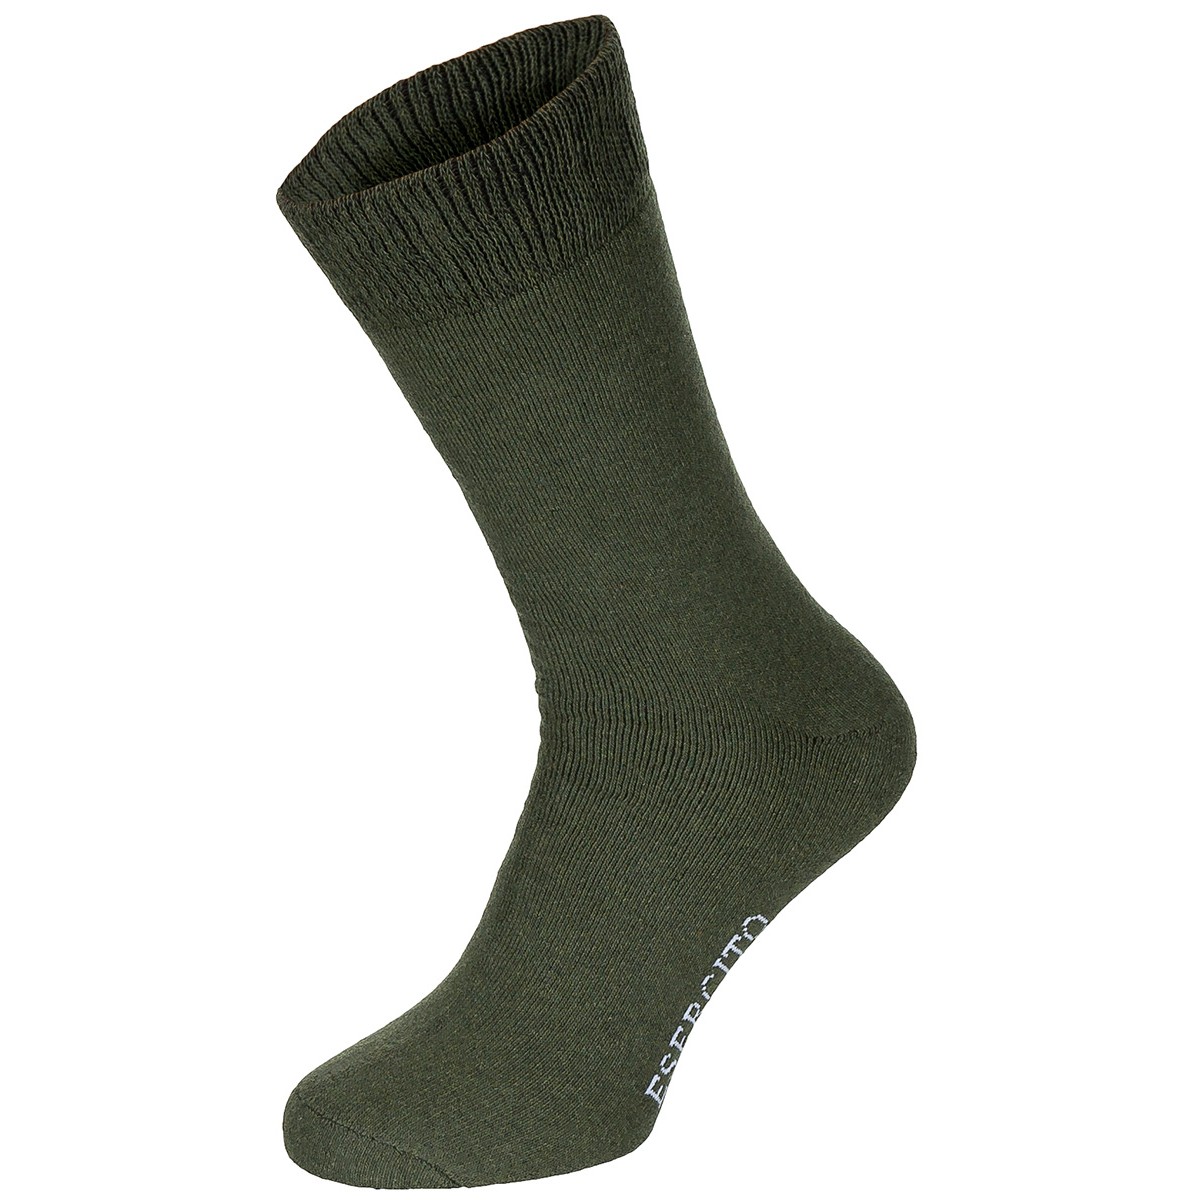 Ponožky vysoké Mezza Calzetta Esercito 3 páry - olivové, 39-42